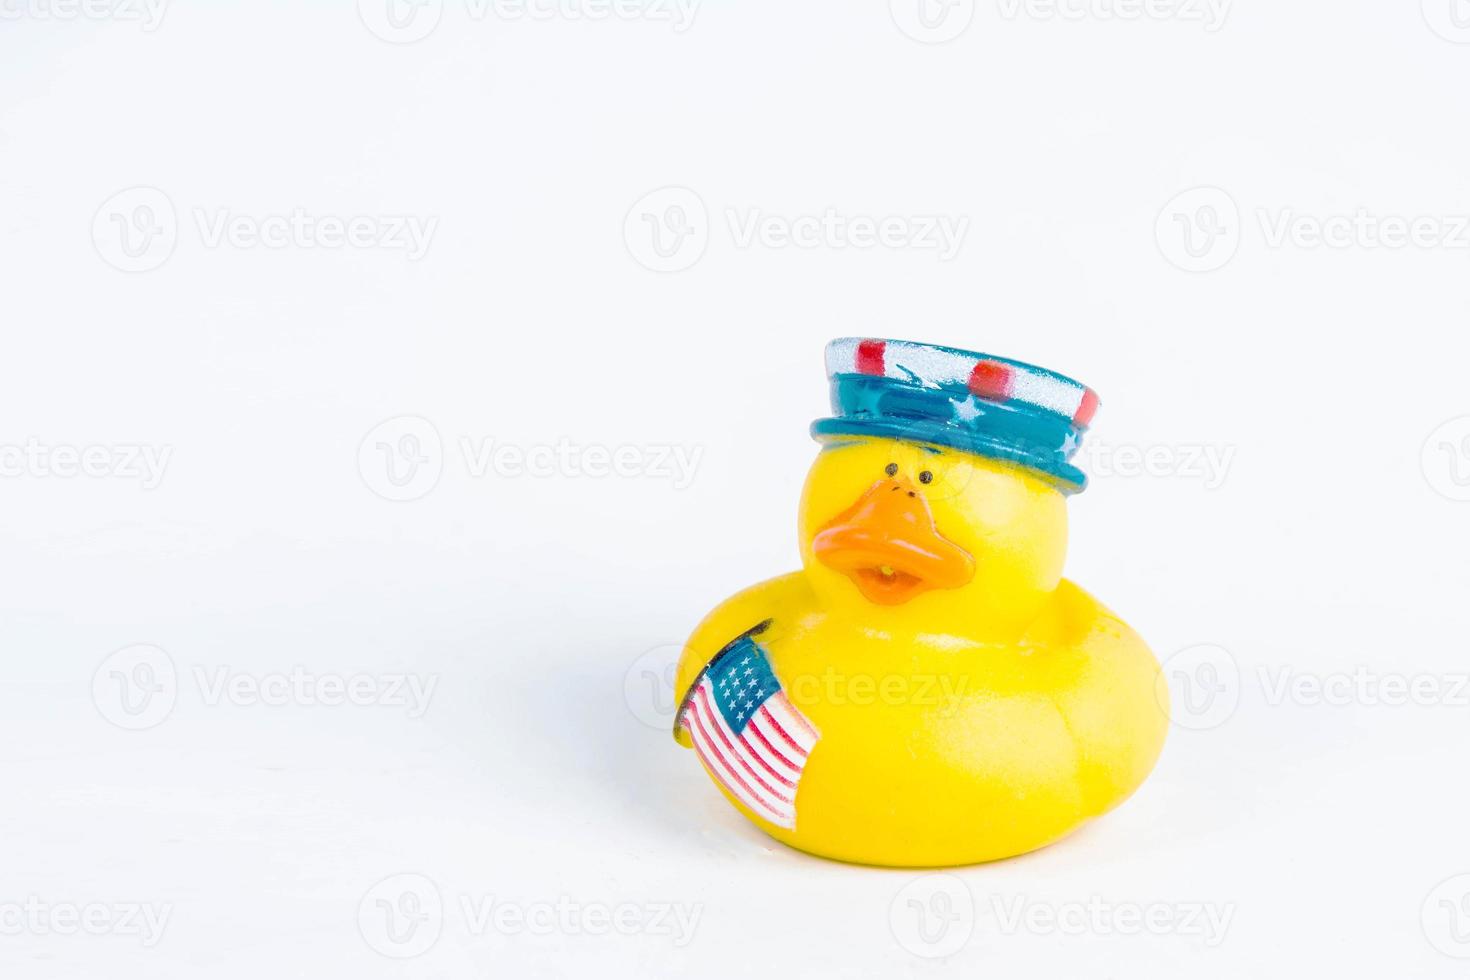 pato de banho no fundo branco brinquedo de pato pato de borracha fofo foto